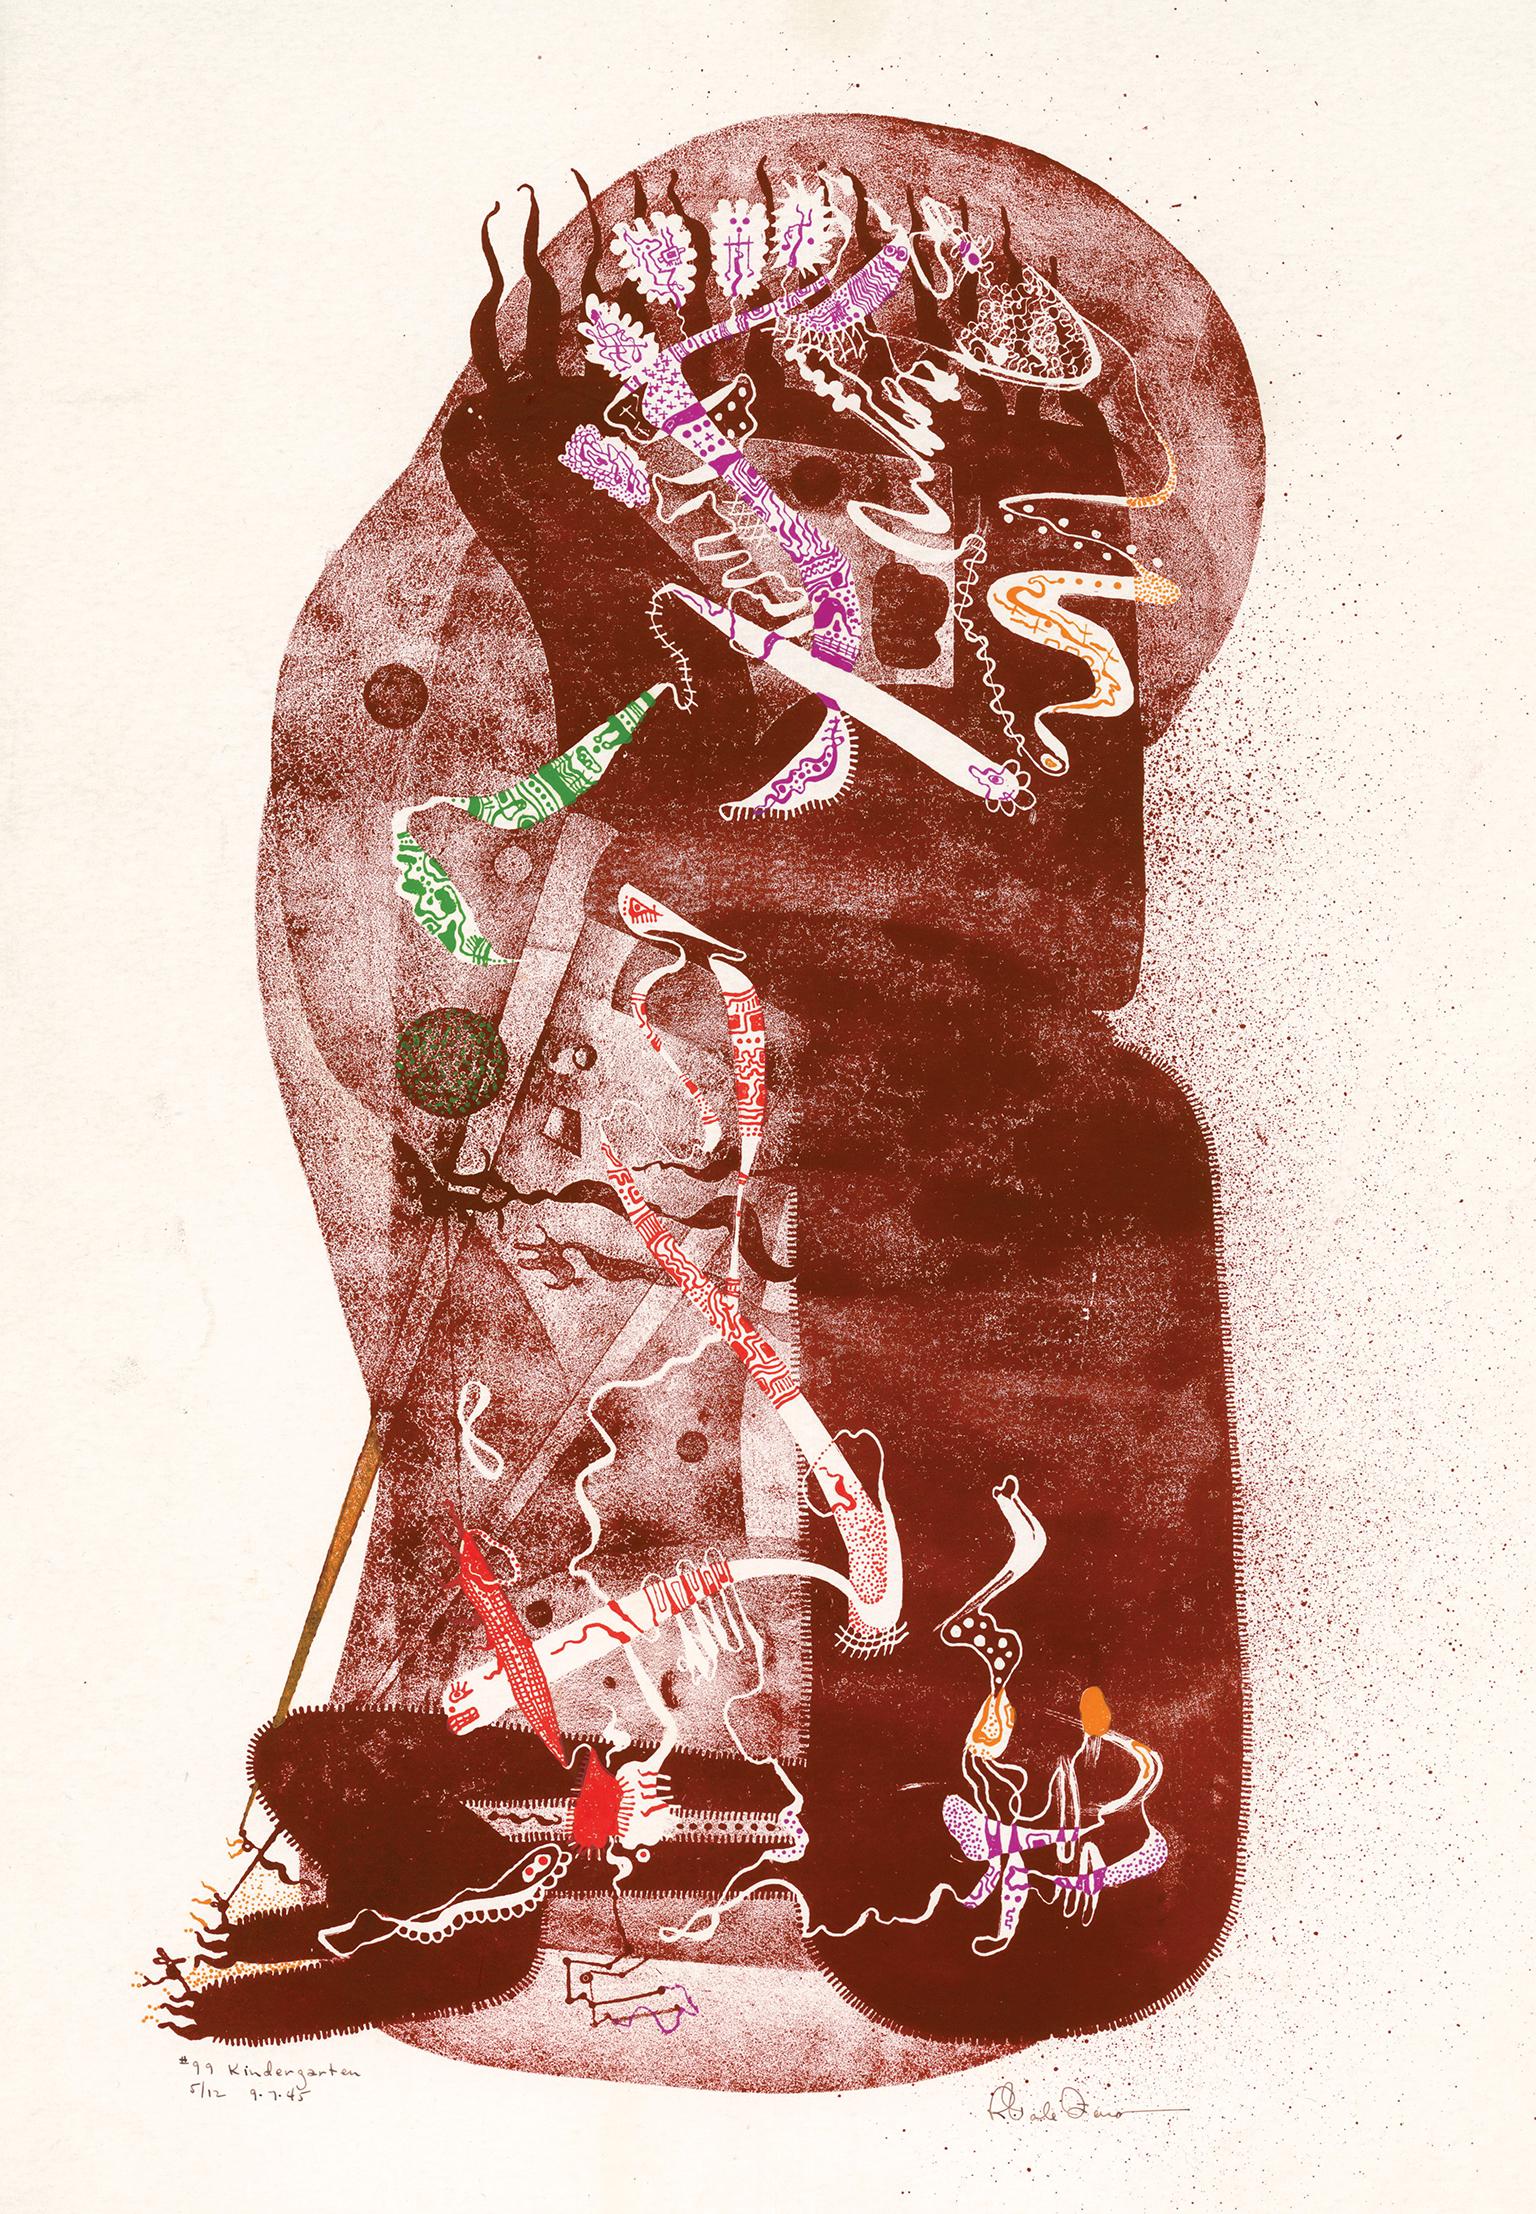 Robert Vale Faro Abstract Print - 'Kindergarten' — Mid-century American Surrealism